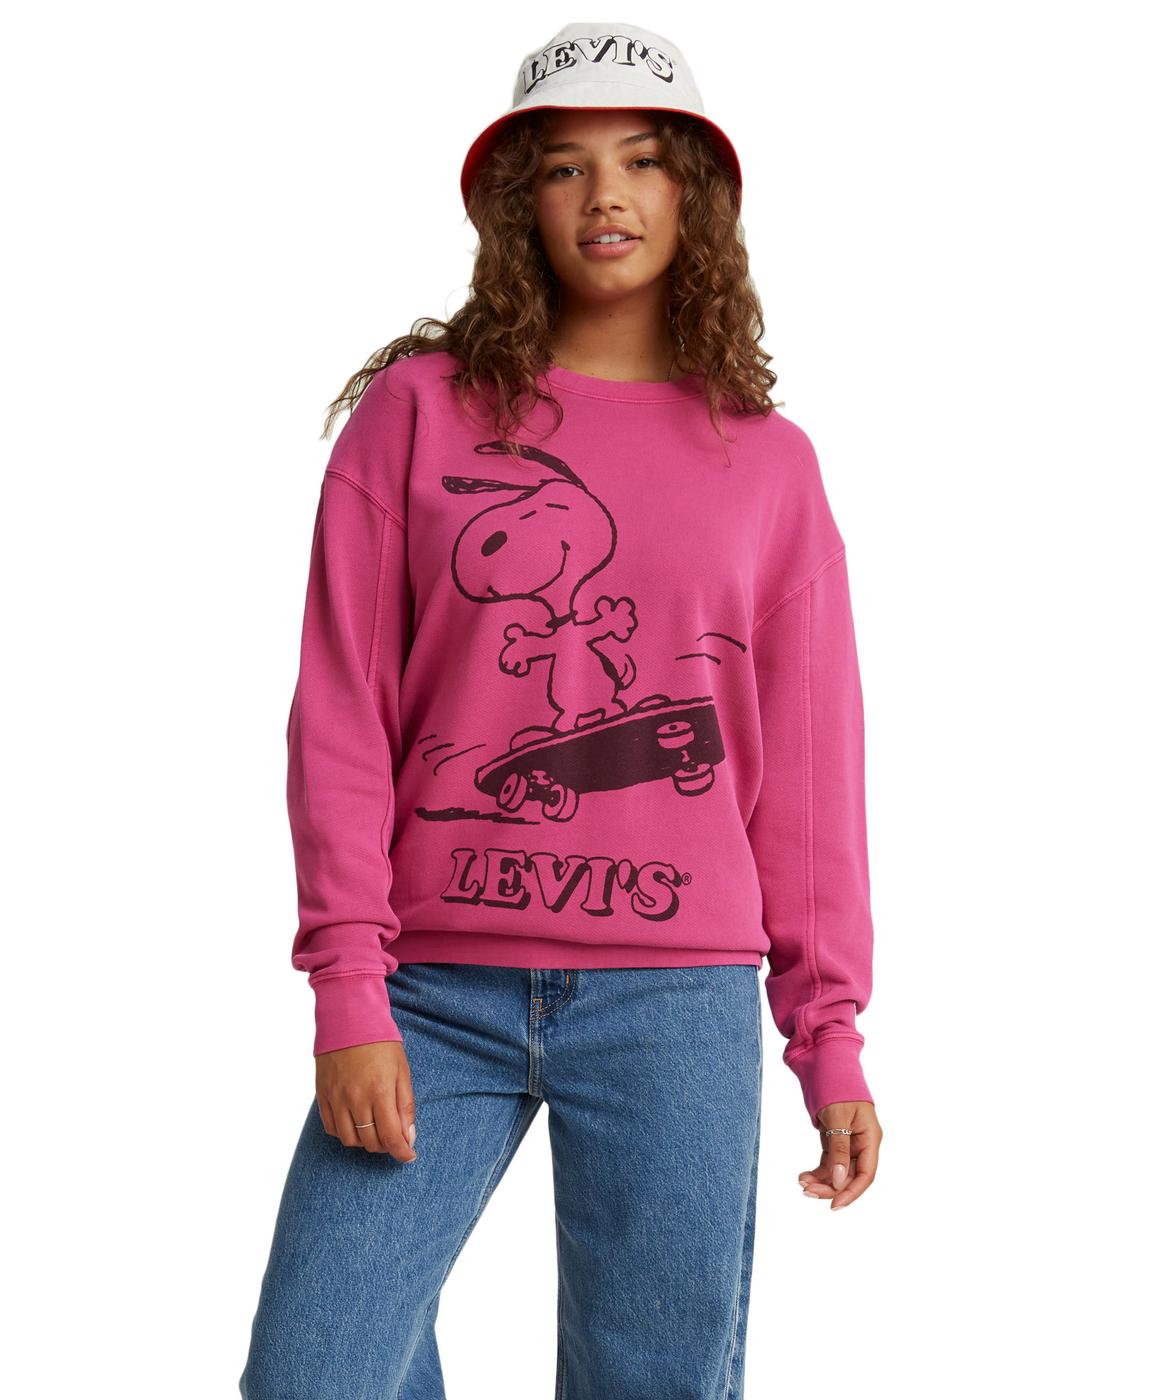 levi's snoopy sweater